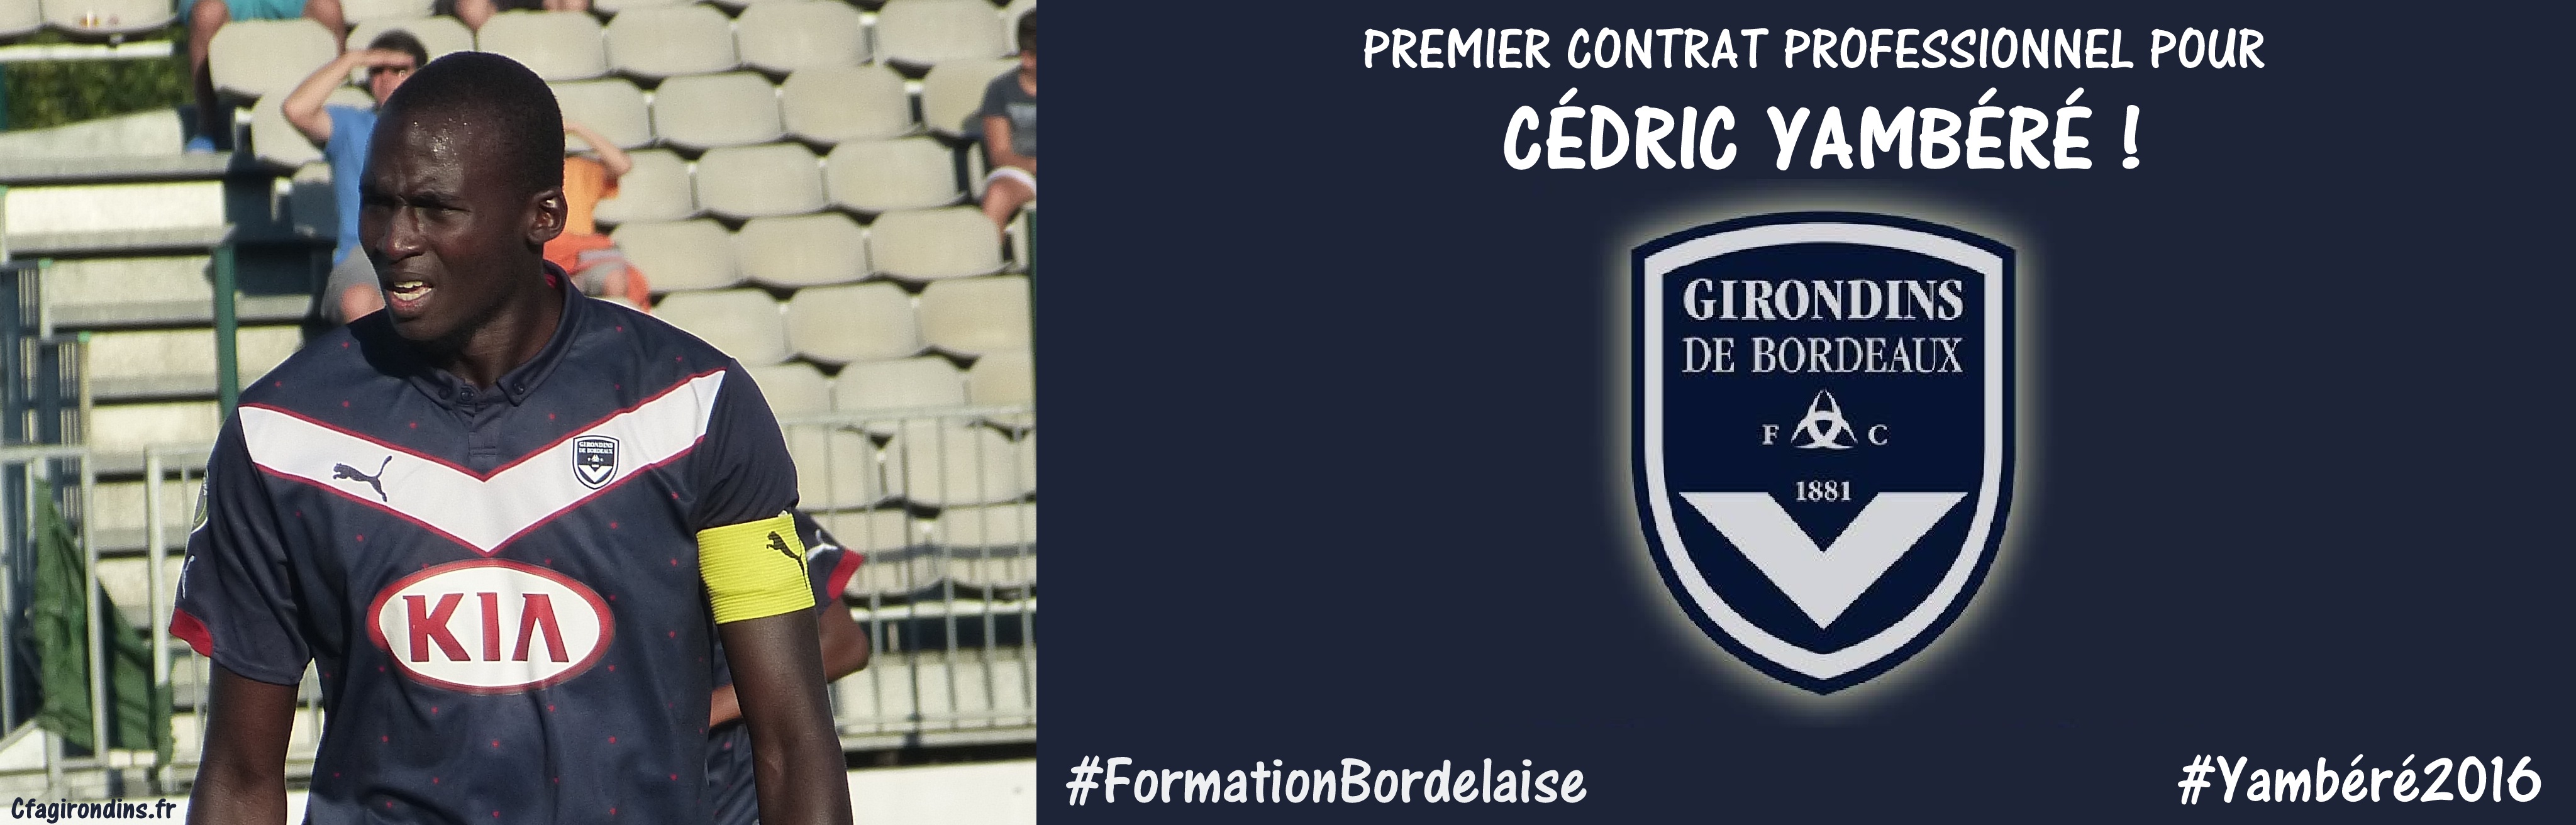 Cfa Girondins : Premier contrat pro pour Yambéré ! - Formation Girondins 